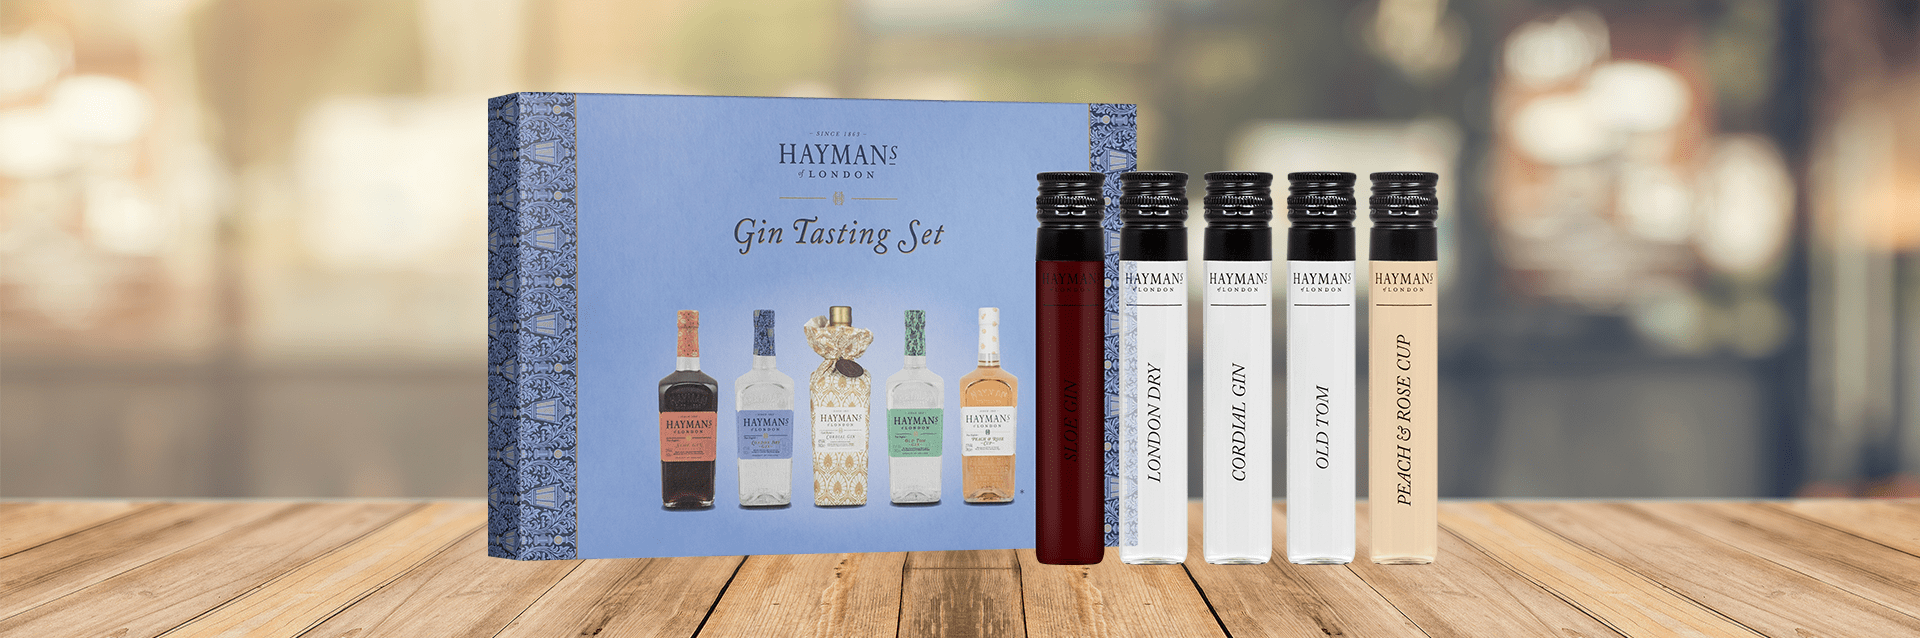 Hayman\'s Gin Tasting Set - Sierra Madre